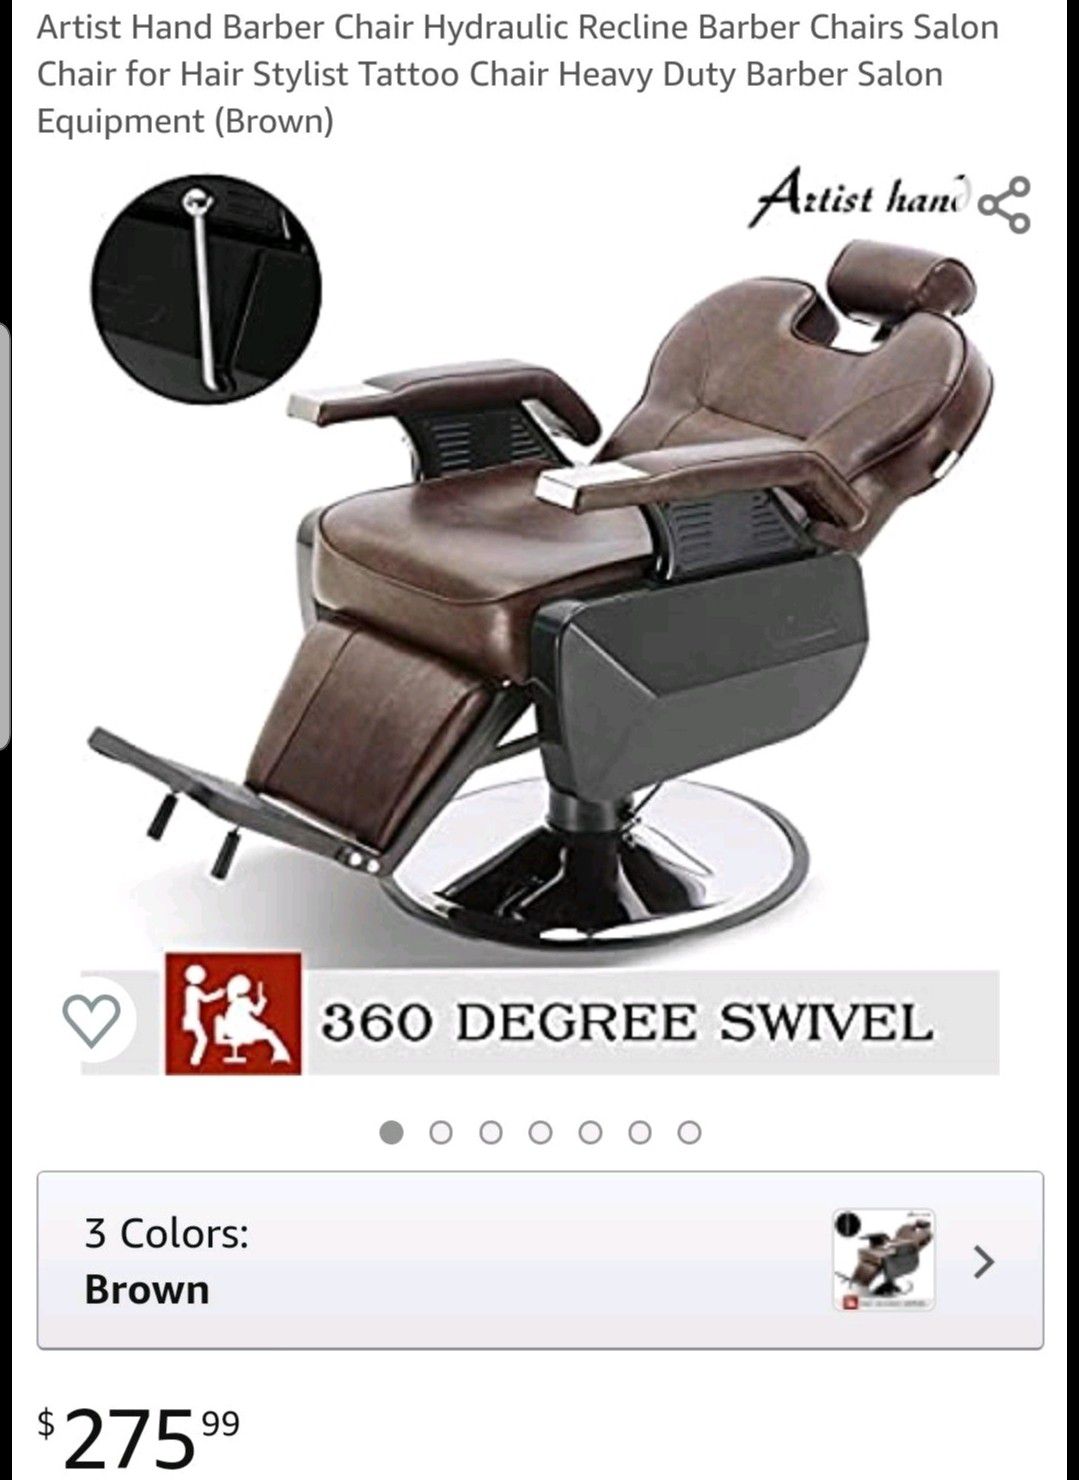 LIKE NEW Hydraulic Reclining Swivel Salon Chair